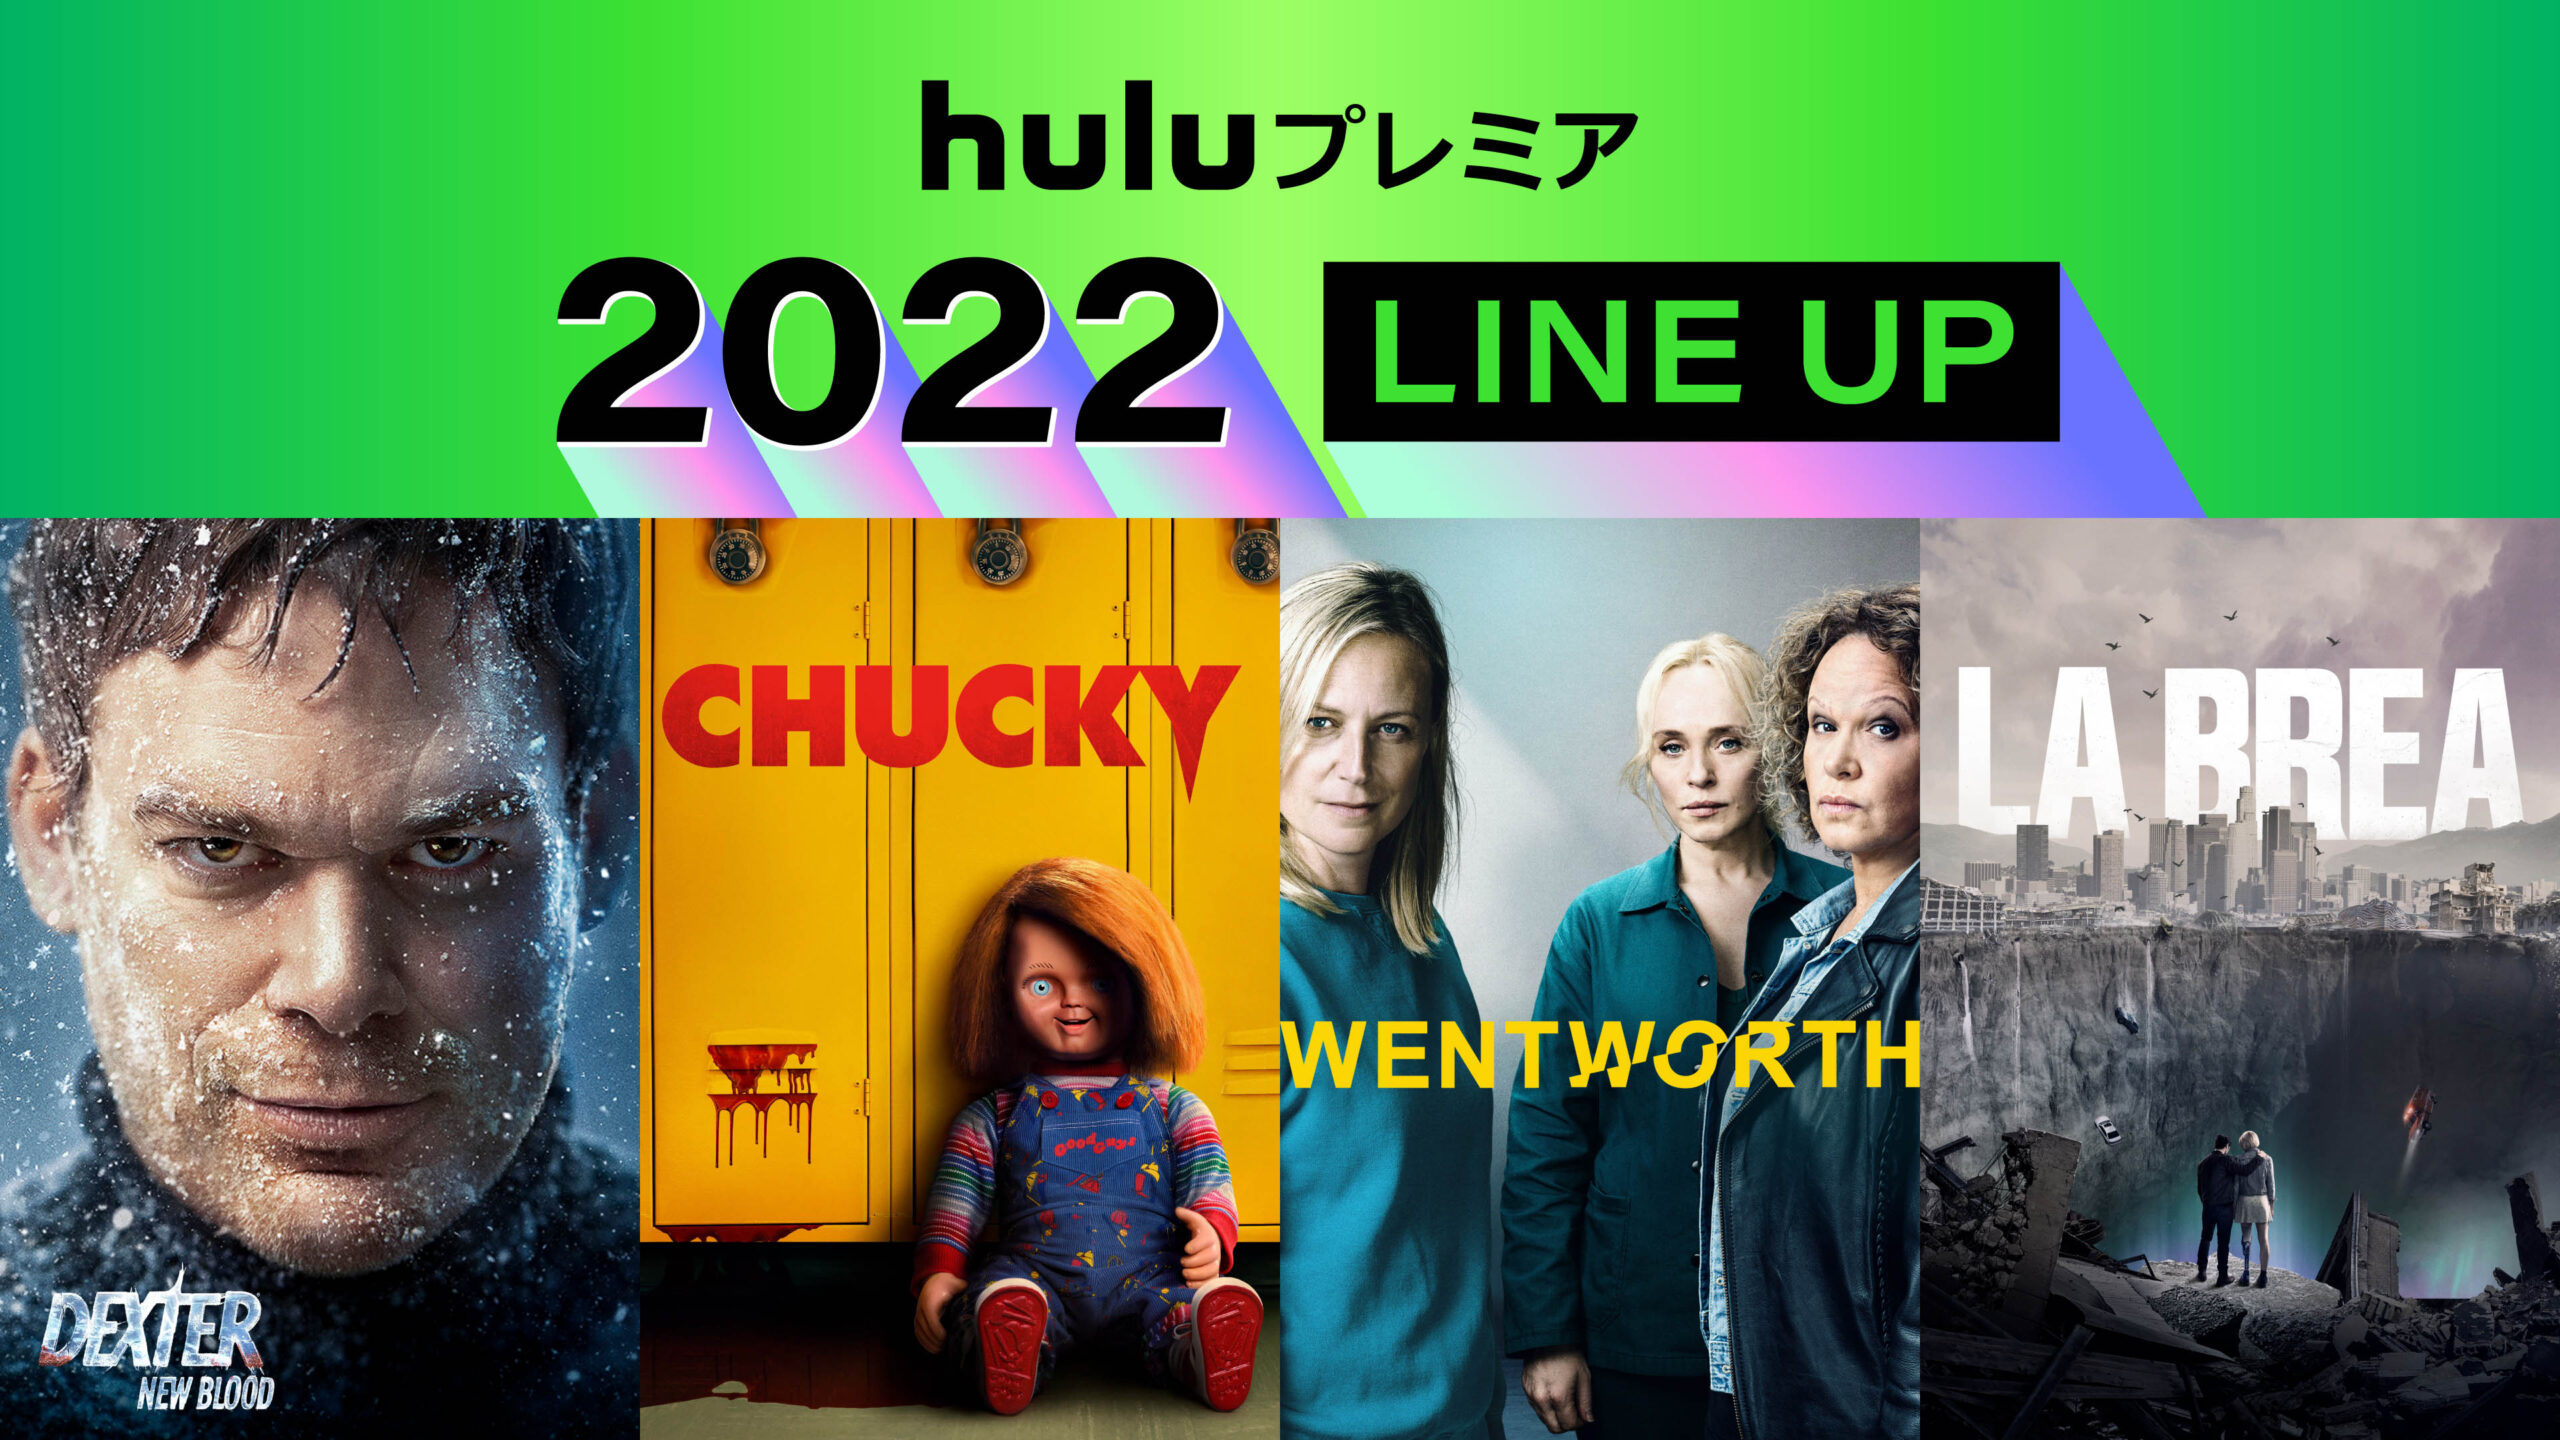 Hulu プレミア」2022 年の豪華ラインナップ発表！ 最恐ホラーアイコン＝チャッキー新ドラマに『デクスター』『ウェントワース女子刑務所』最新作も  - WEEKEND CINEMA